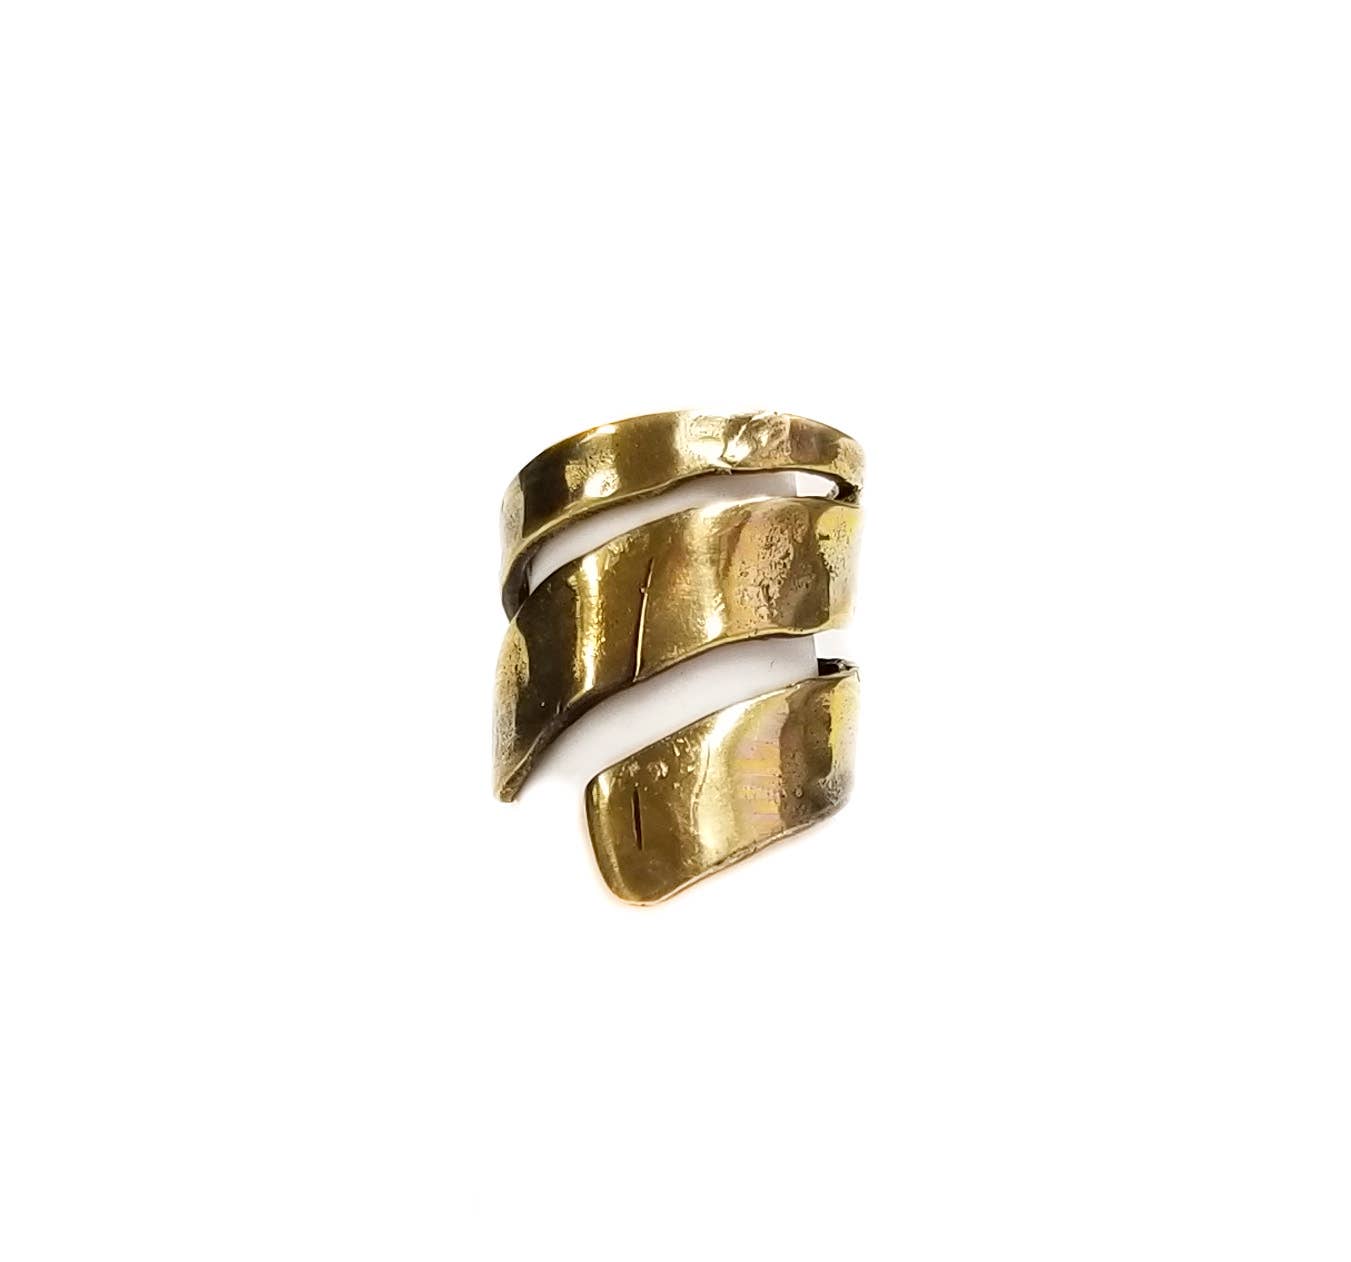 Handmade Bronze Spiral Ring